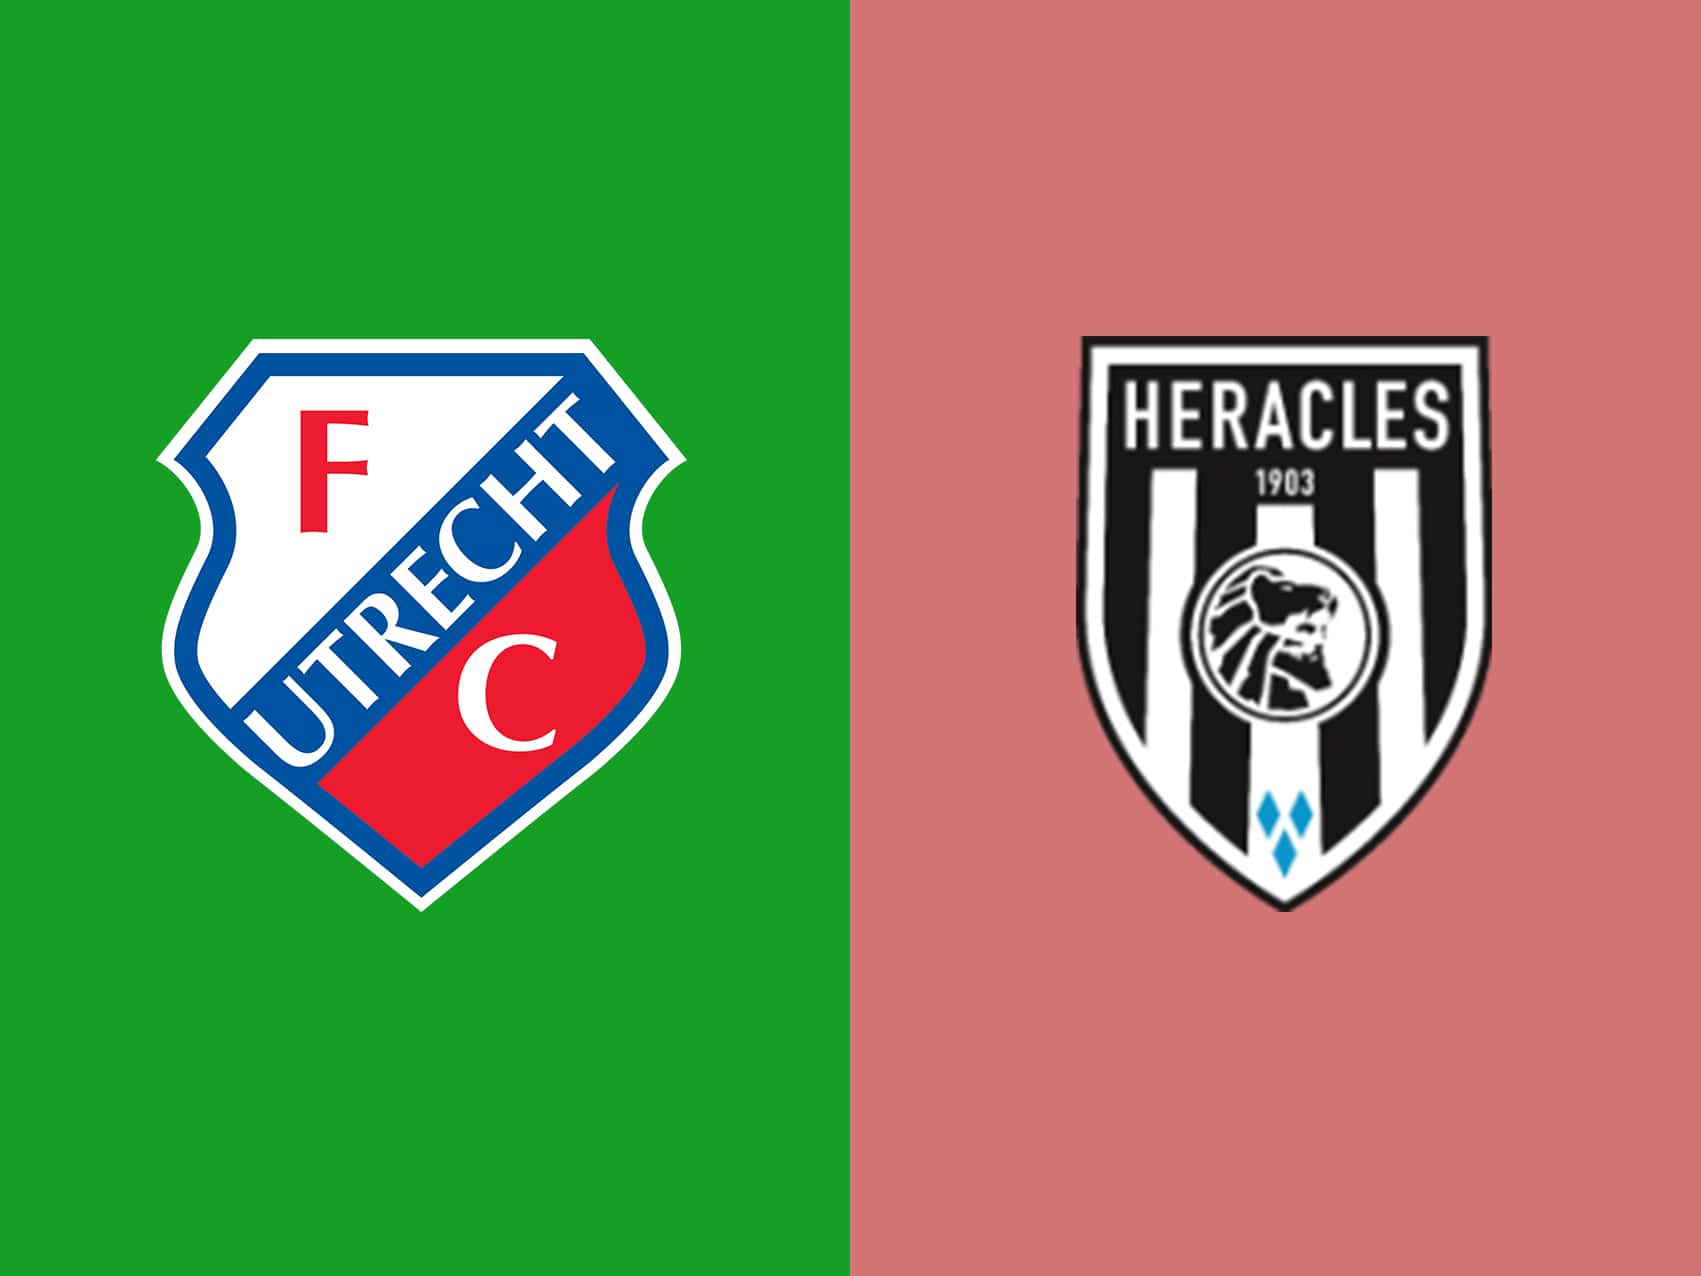 Utrecht vs Heracles Football Predictions